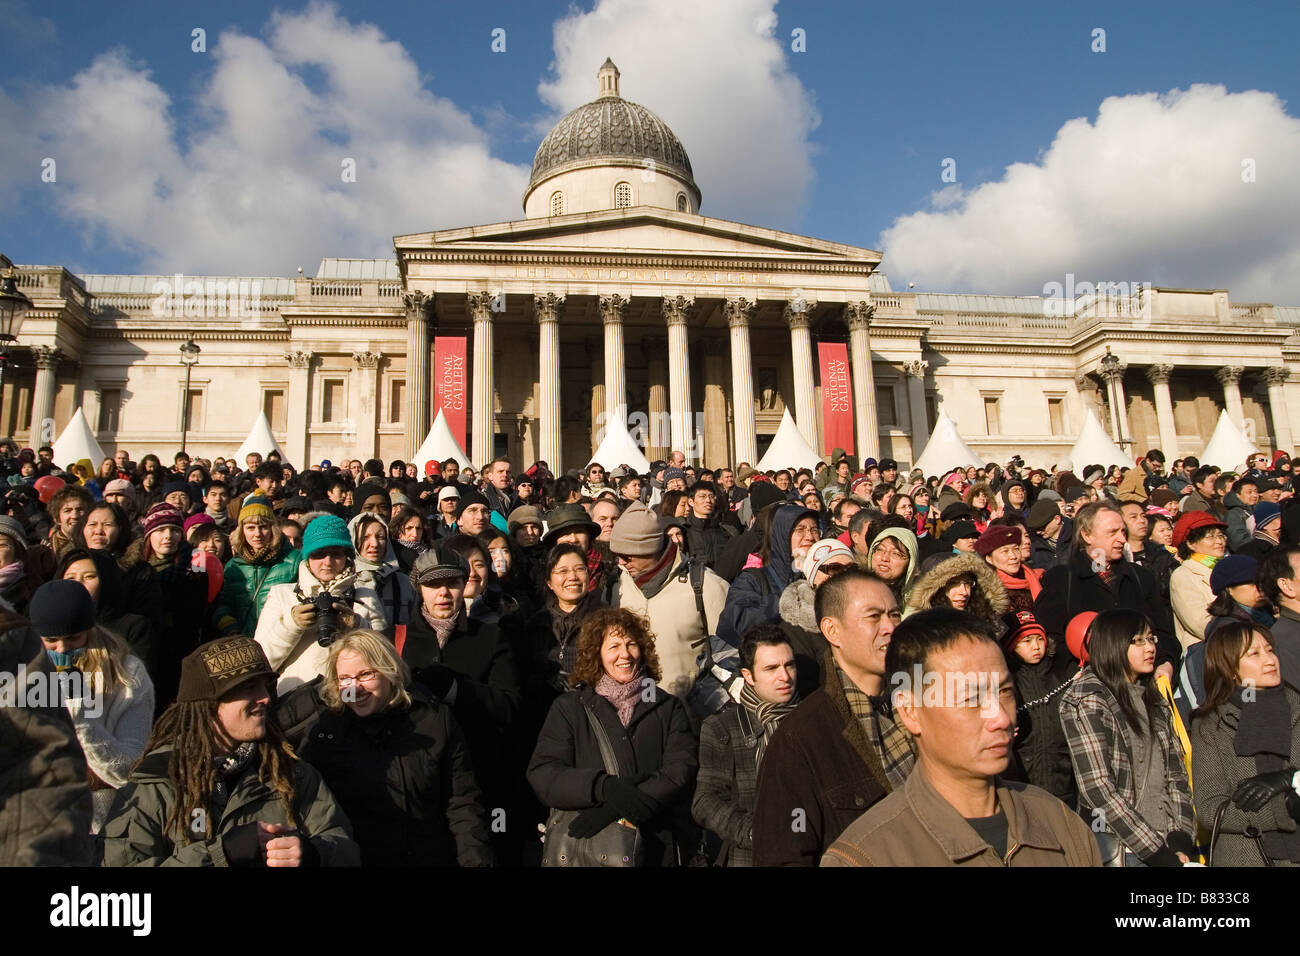 Gran multitud en la plaza Trafalgar de Londres Foto de stock